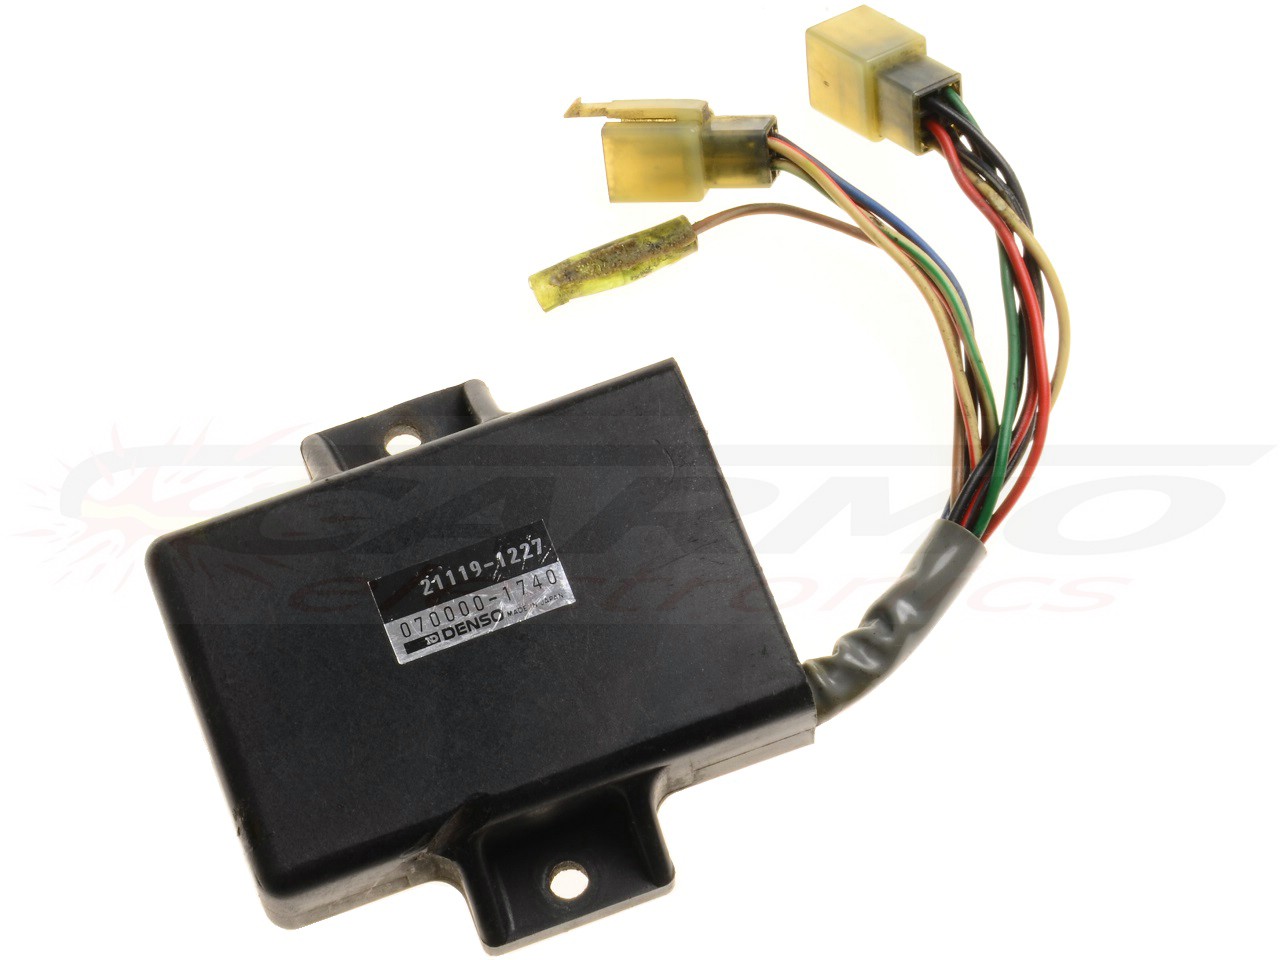 KZ305 Z305 LTD/CSR (21119-1227, 07000-1740) CDI ignitor